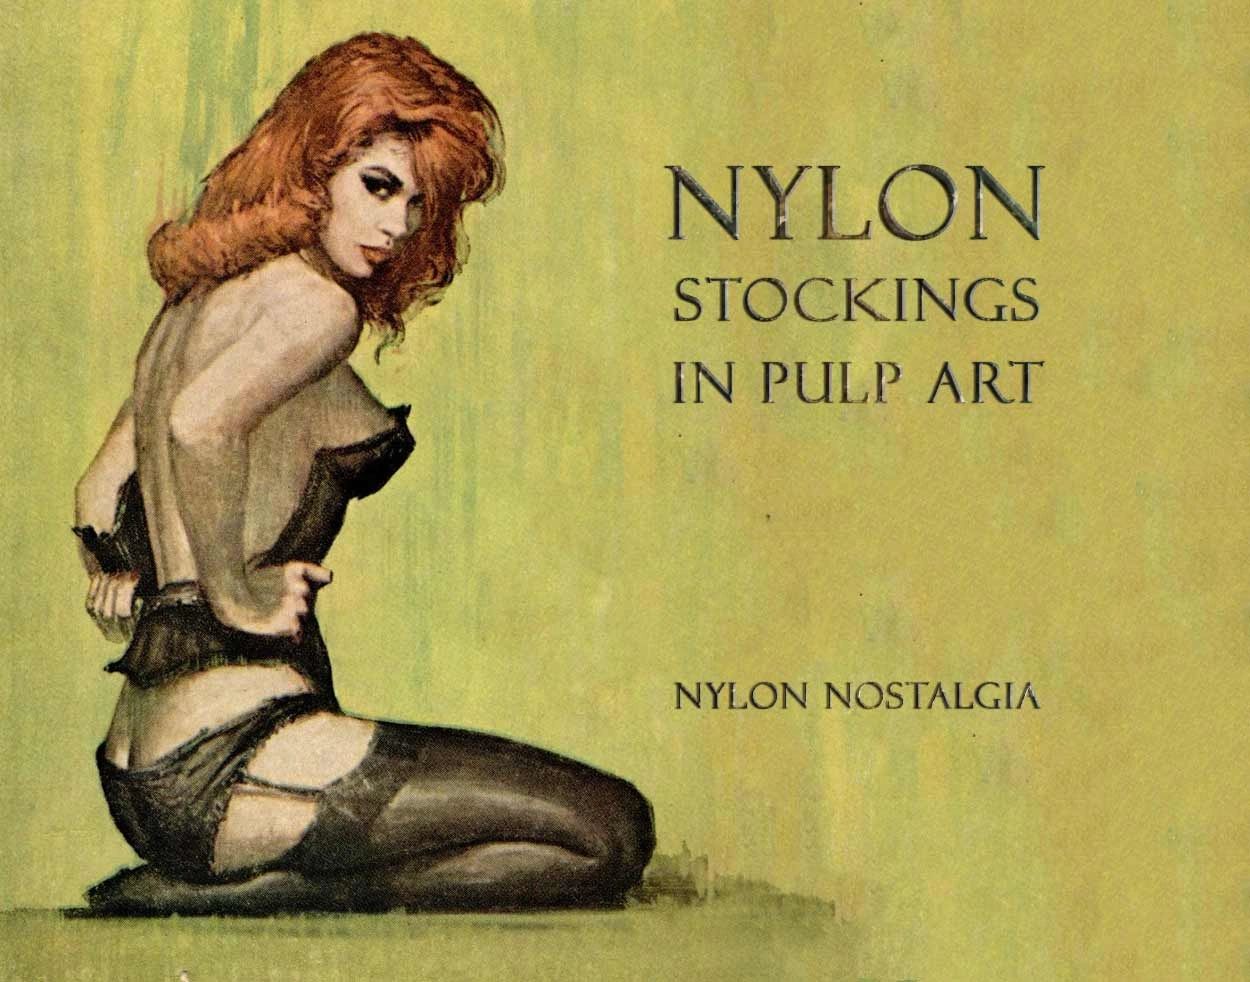 Sheer nylon stockings in pulp fiction cover art